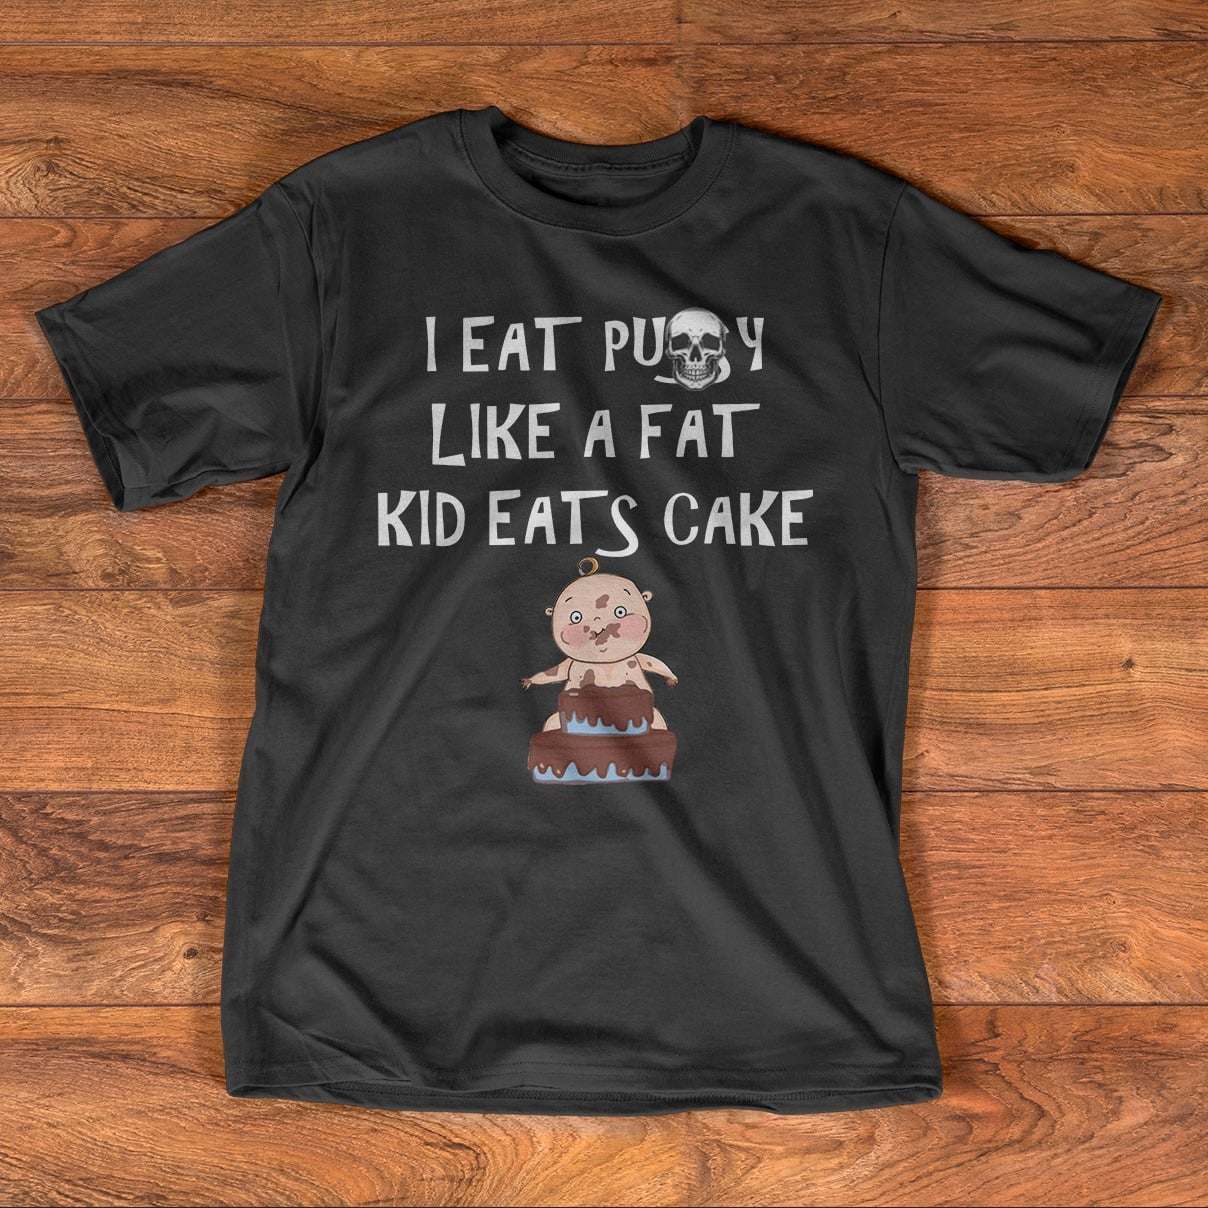 I eat pussy like a fat kid eats cake - Kid eating cake, evil skull